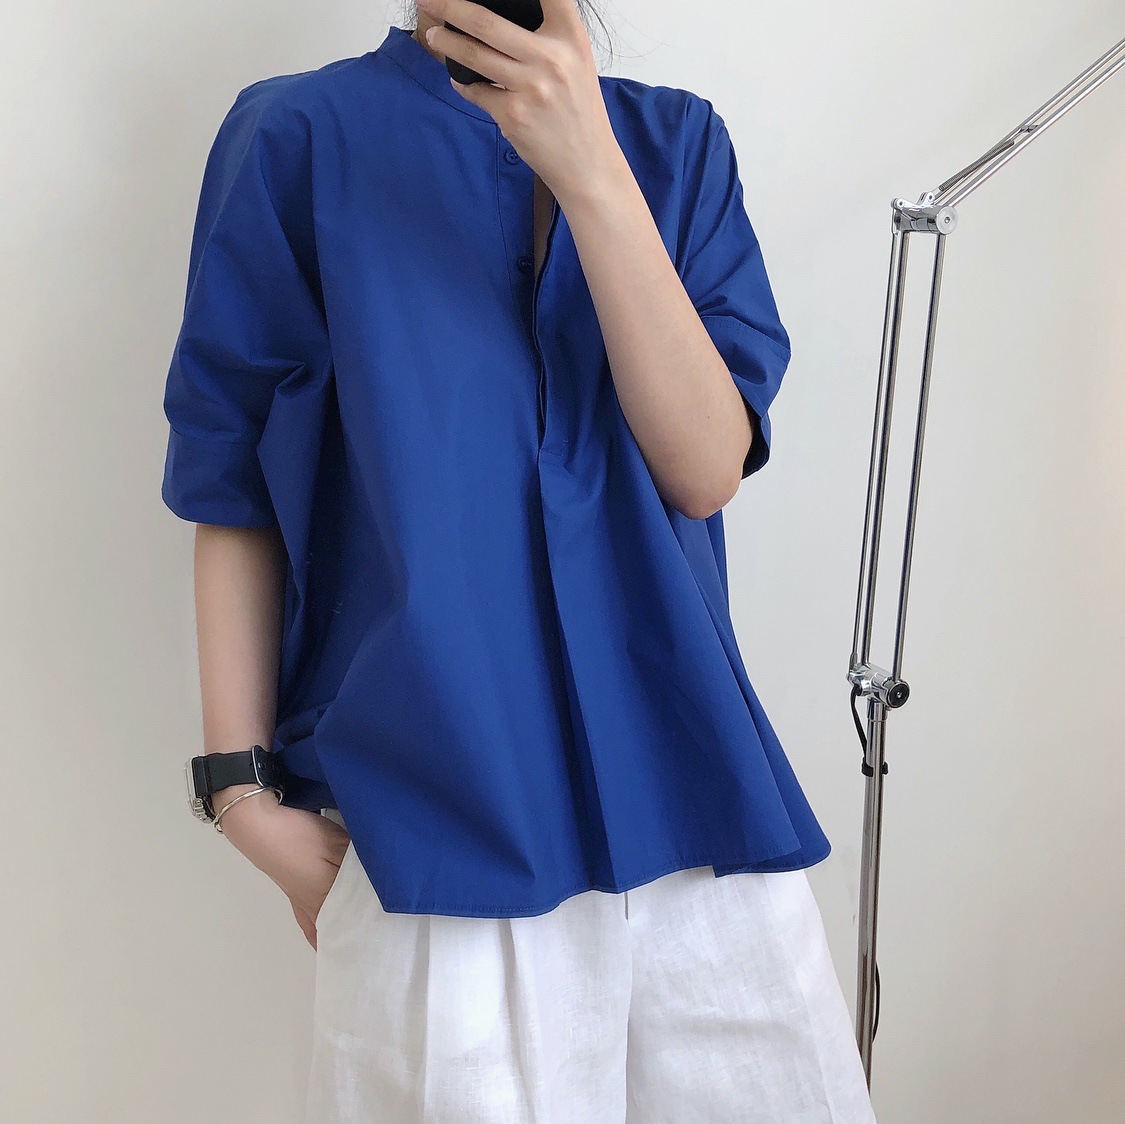 Summer new quality INS minimalist trendy standing shirt loose thin stylish comfortable soil shirt female